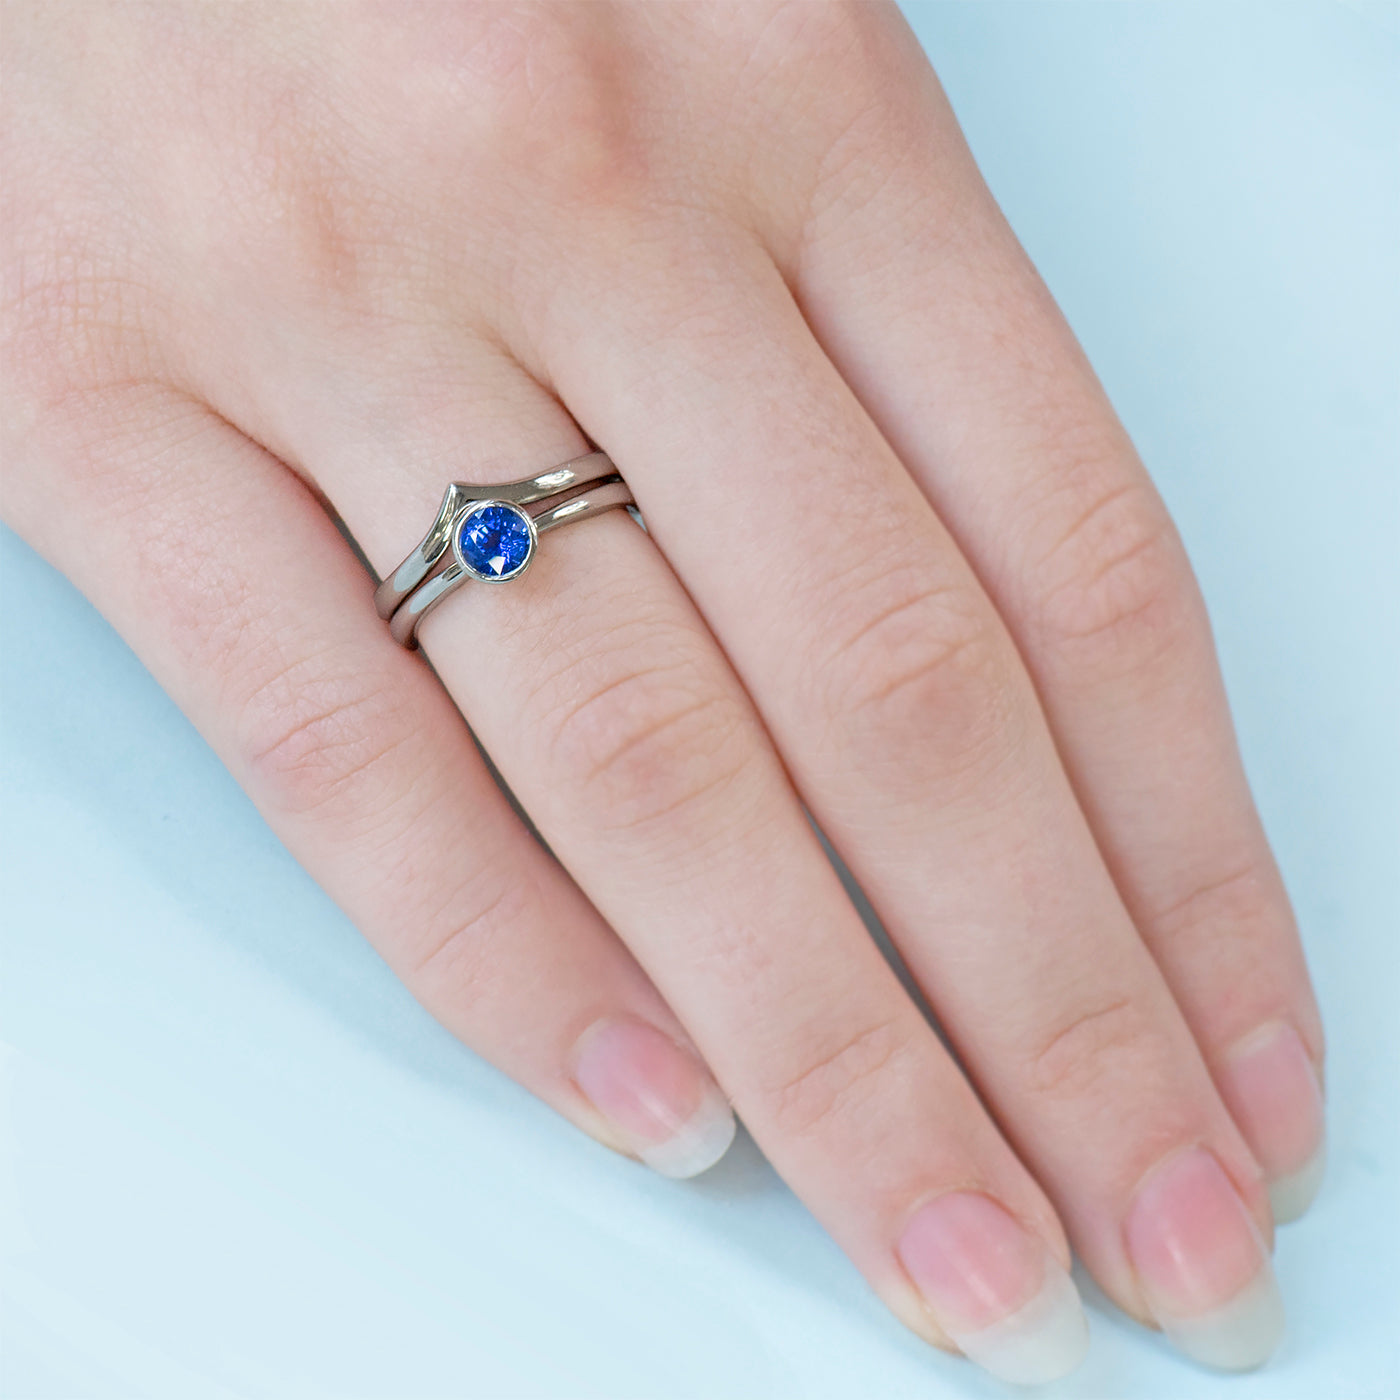 18ct white gold blue sapphire wedding & engagement ring set